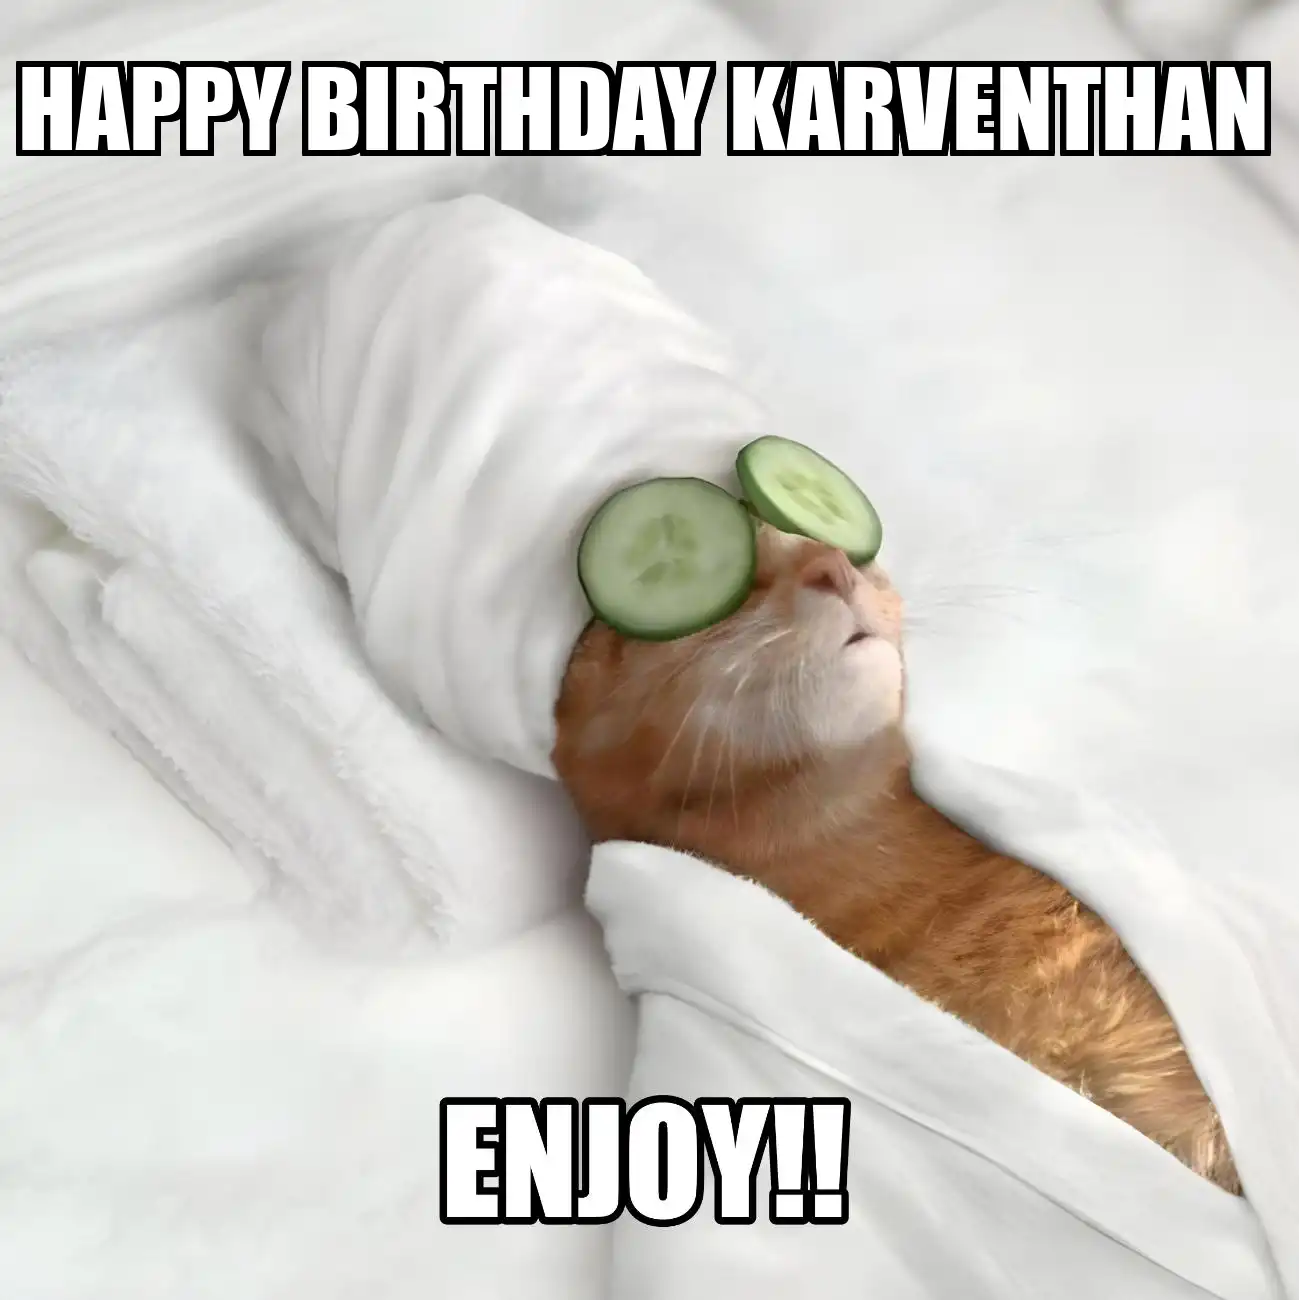 Happy Birthday Karventhan Enjoy Cat Meme